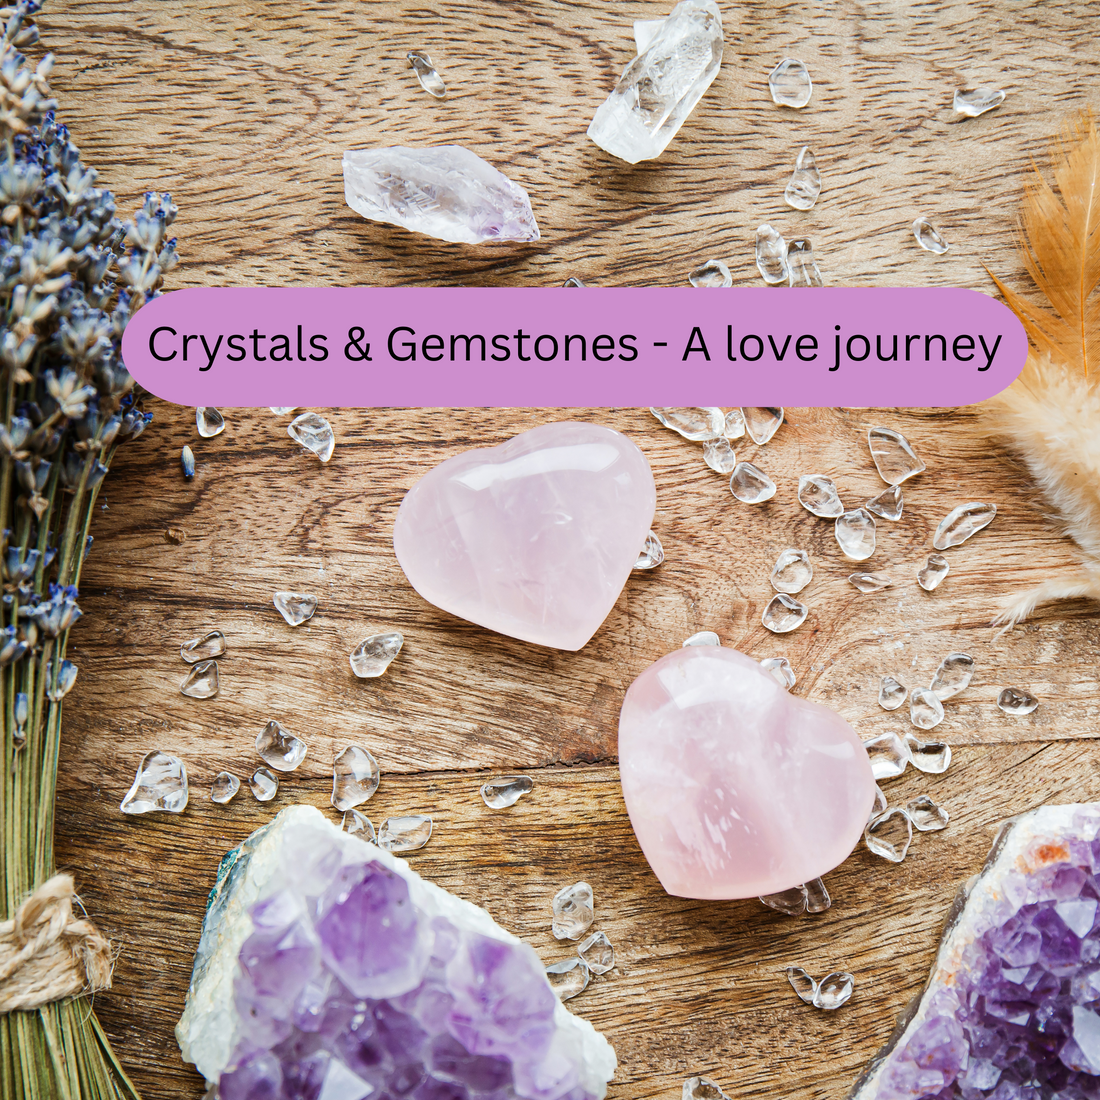 Crystals & Gemstones - A love journey